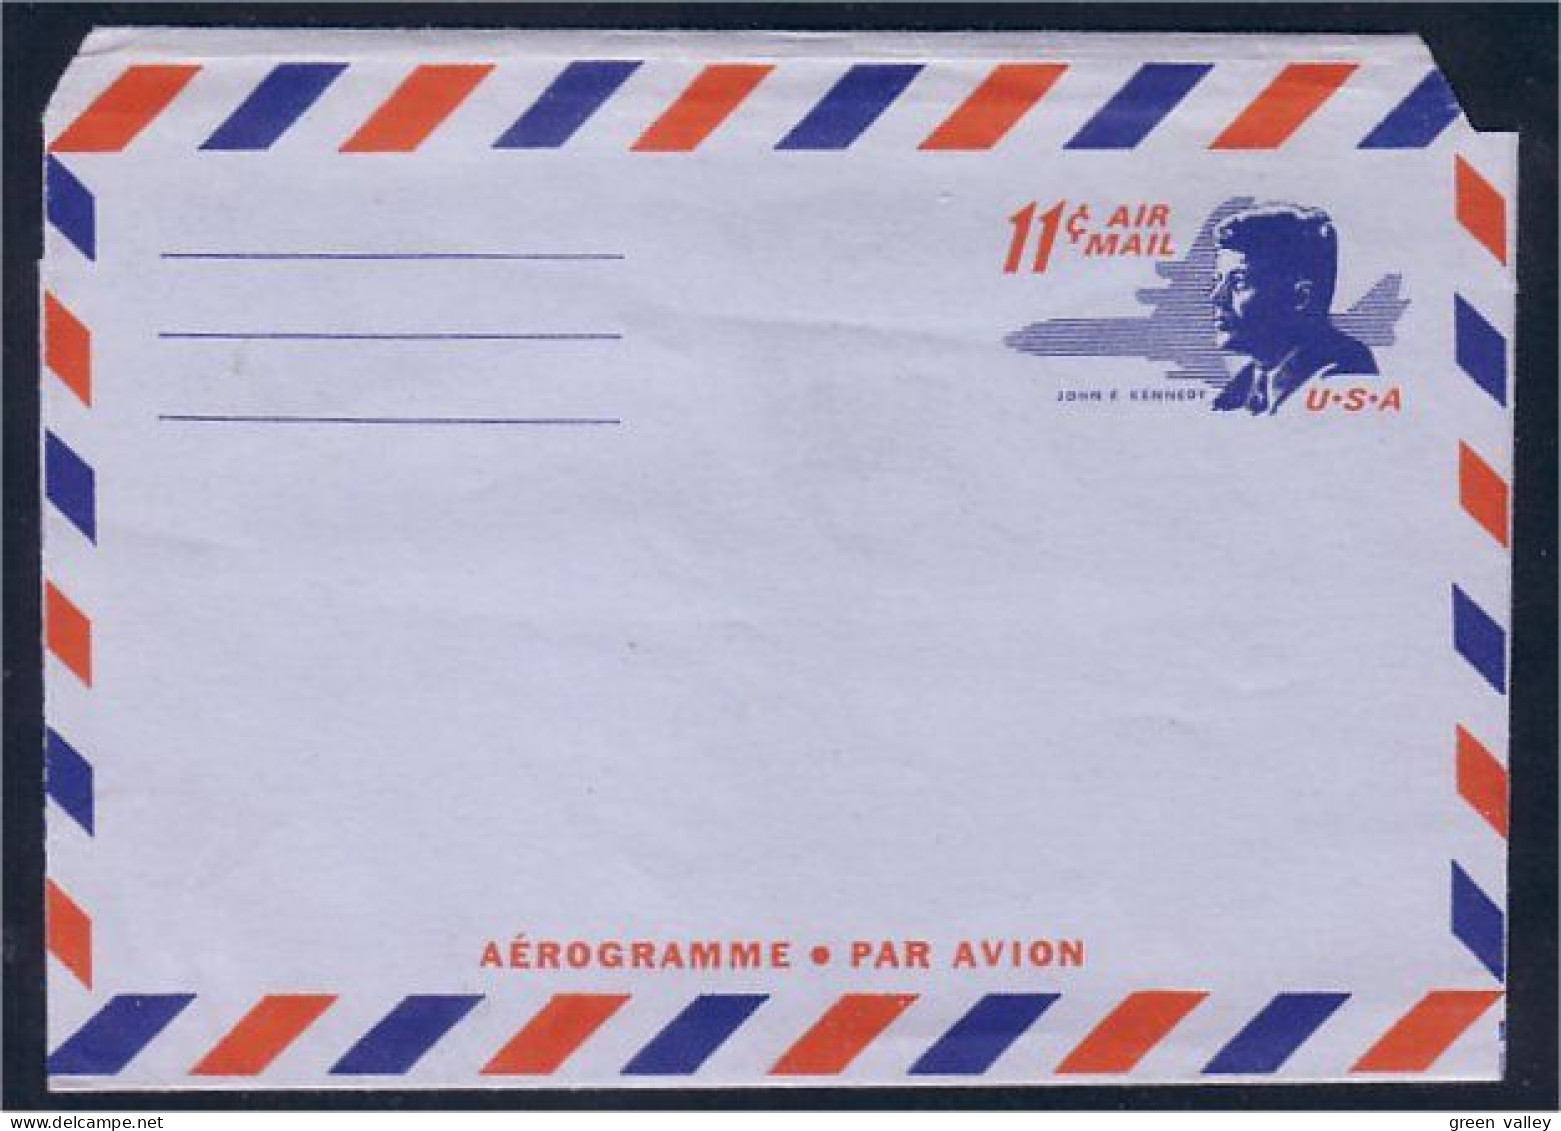 Aerogramme Air Letter Kennedy 11c Air Mail ( A82 109) - Independecia USA